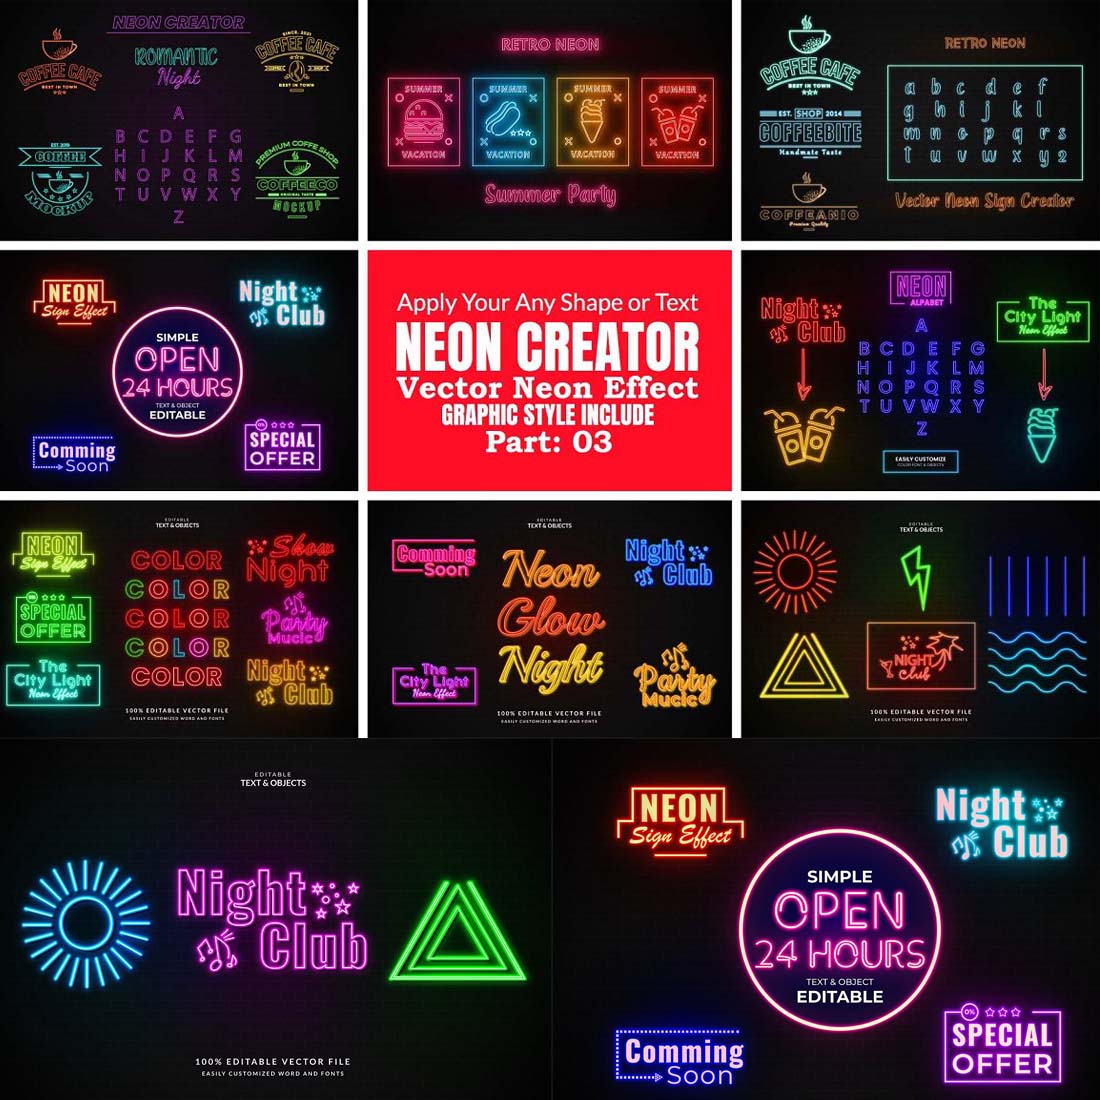 Neon Effect Creator cover image.